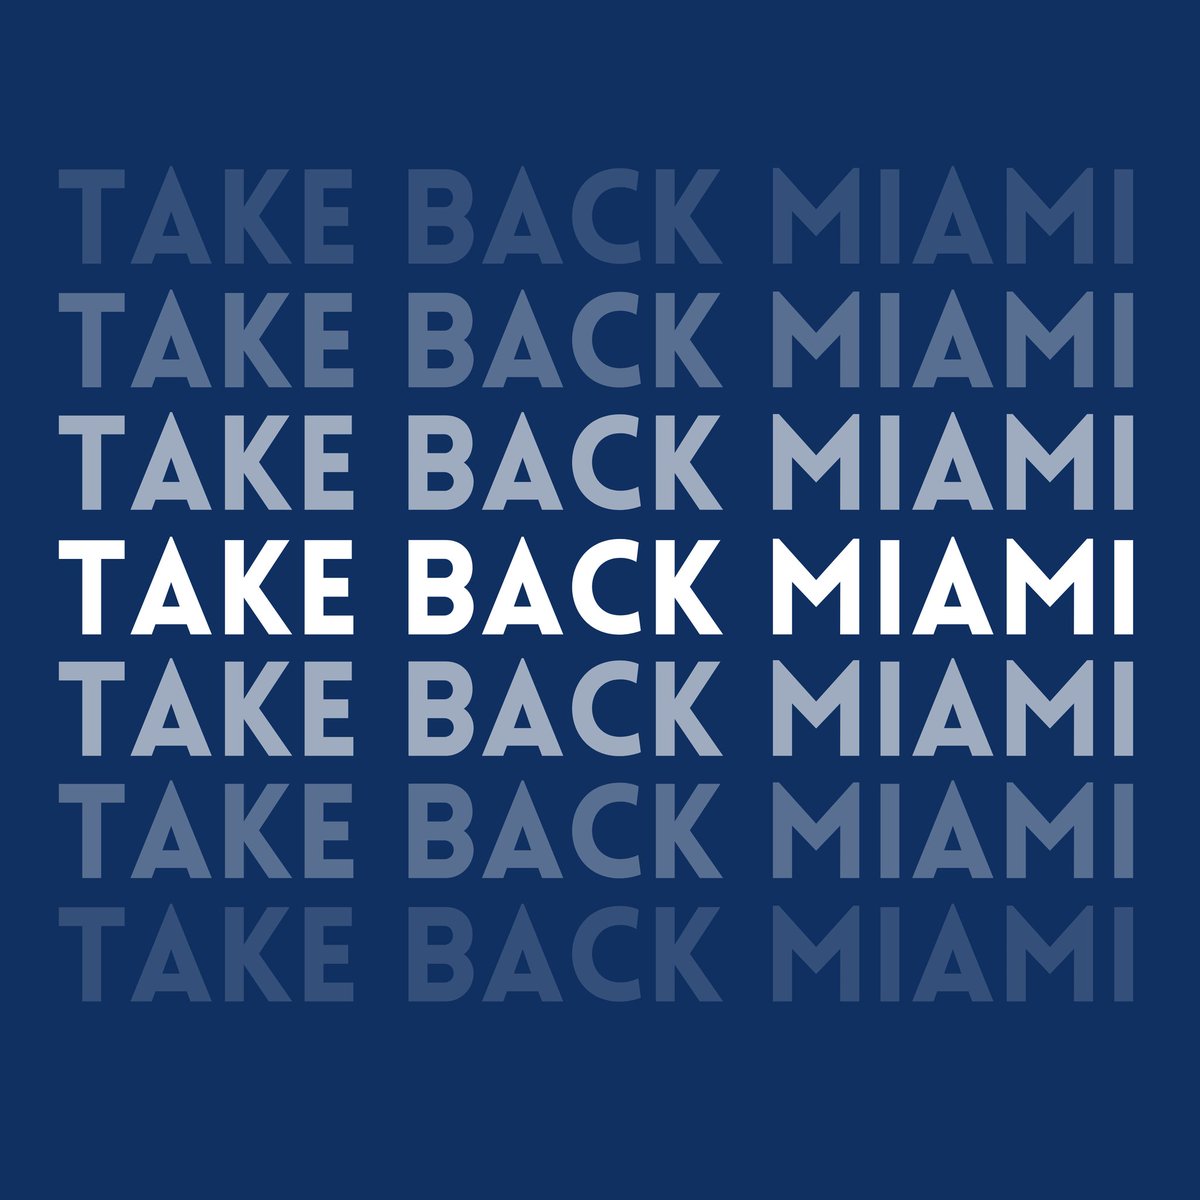 #TakeBackFlorida #TakeBackMiami #TakeBack118 @FlaDems